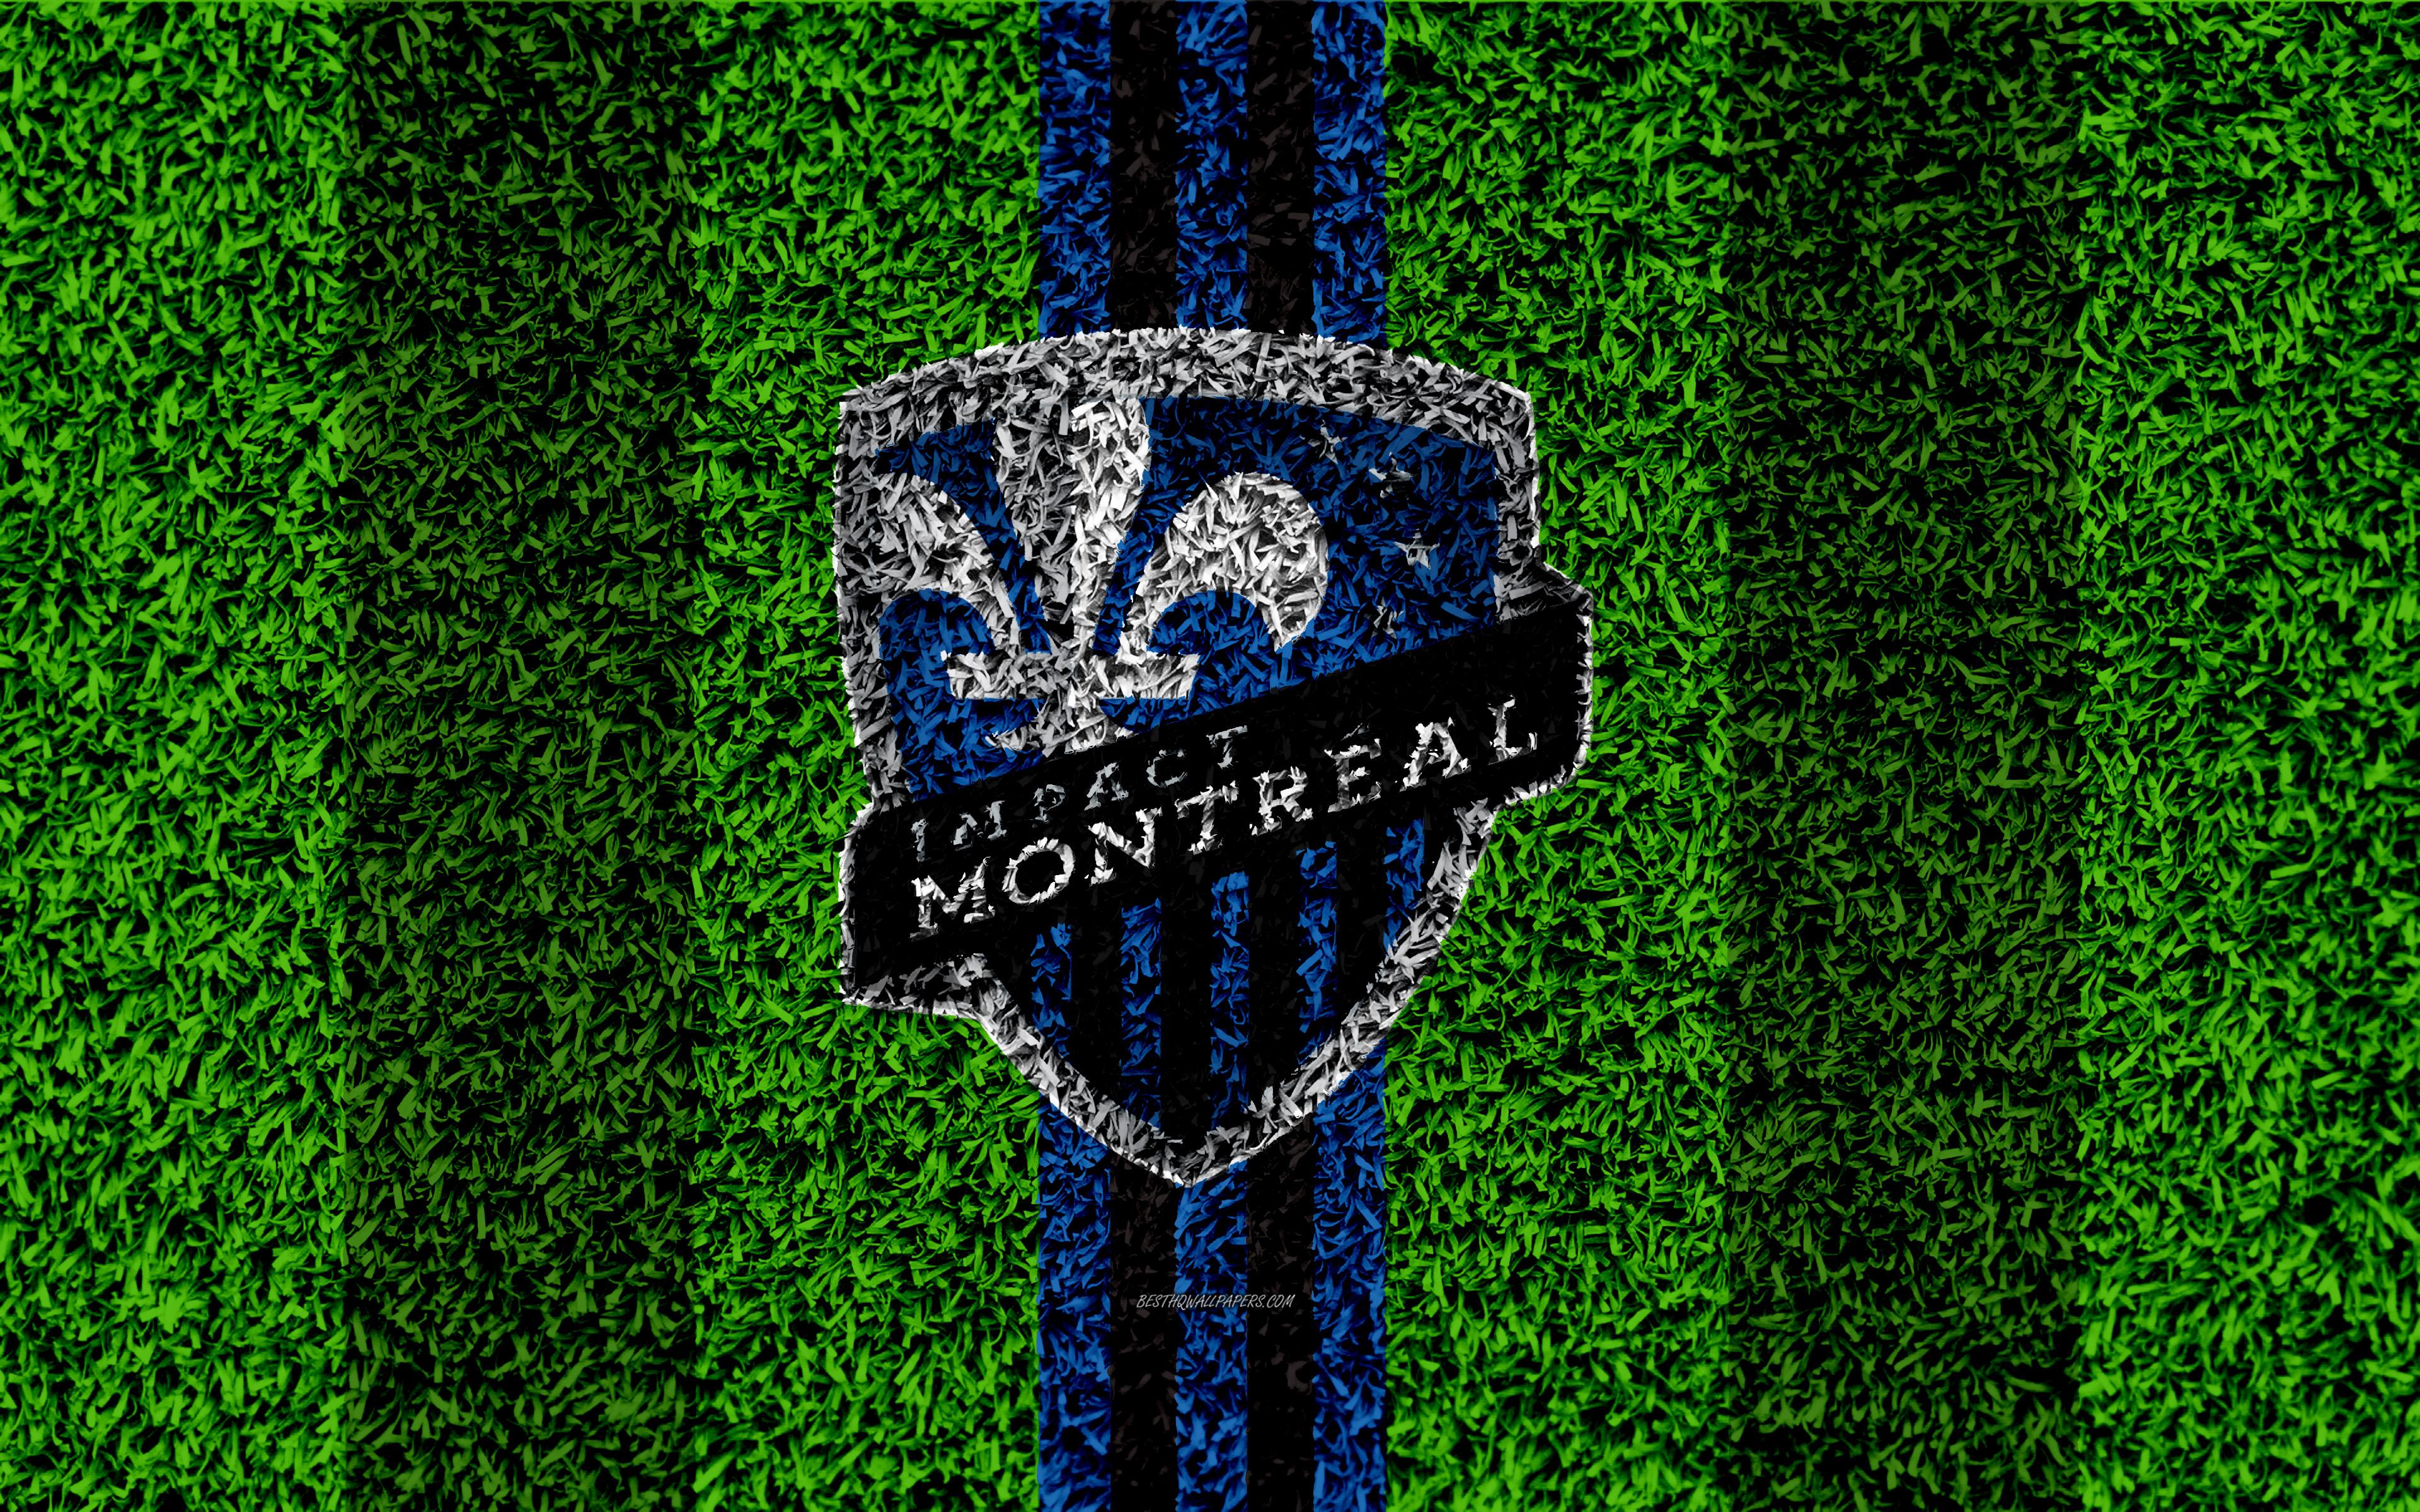 Download wallpaper Montreal Impact FC, 4k, MLS, football lawn, logo